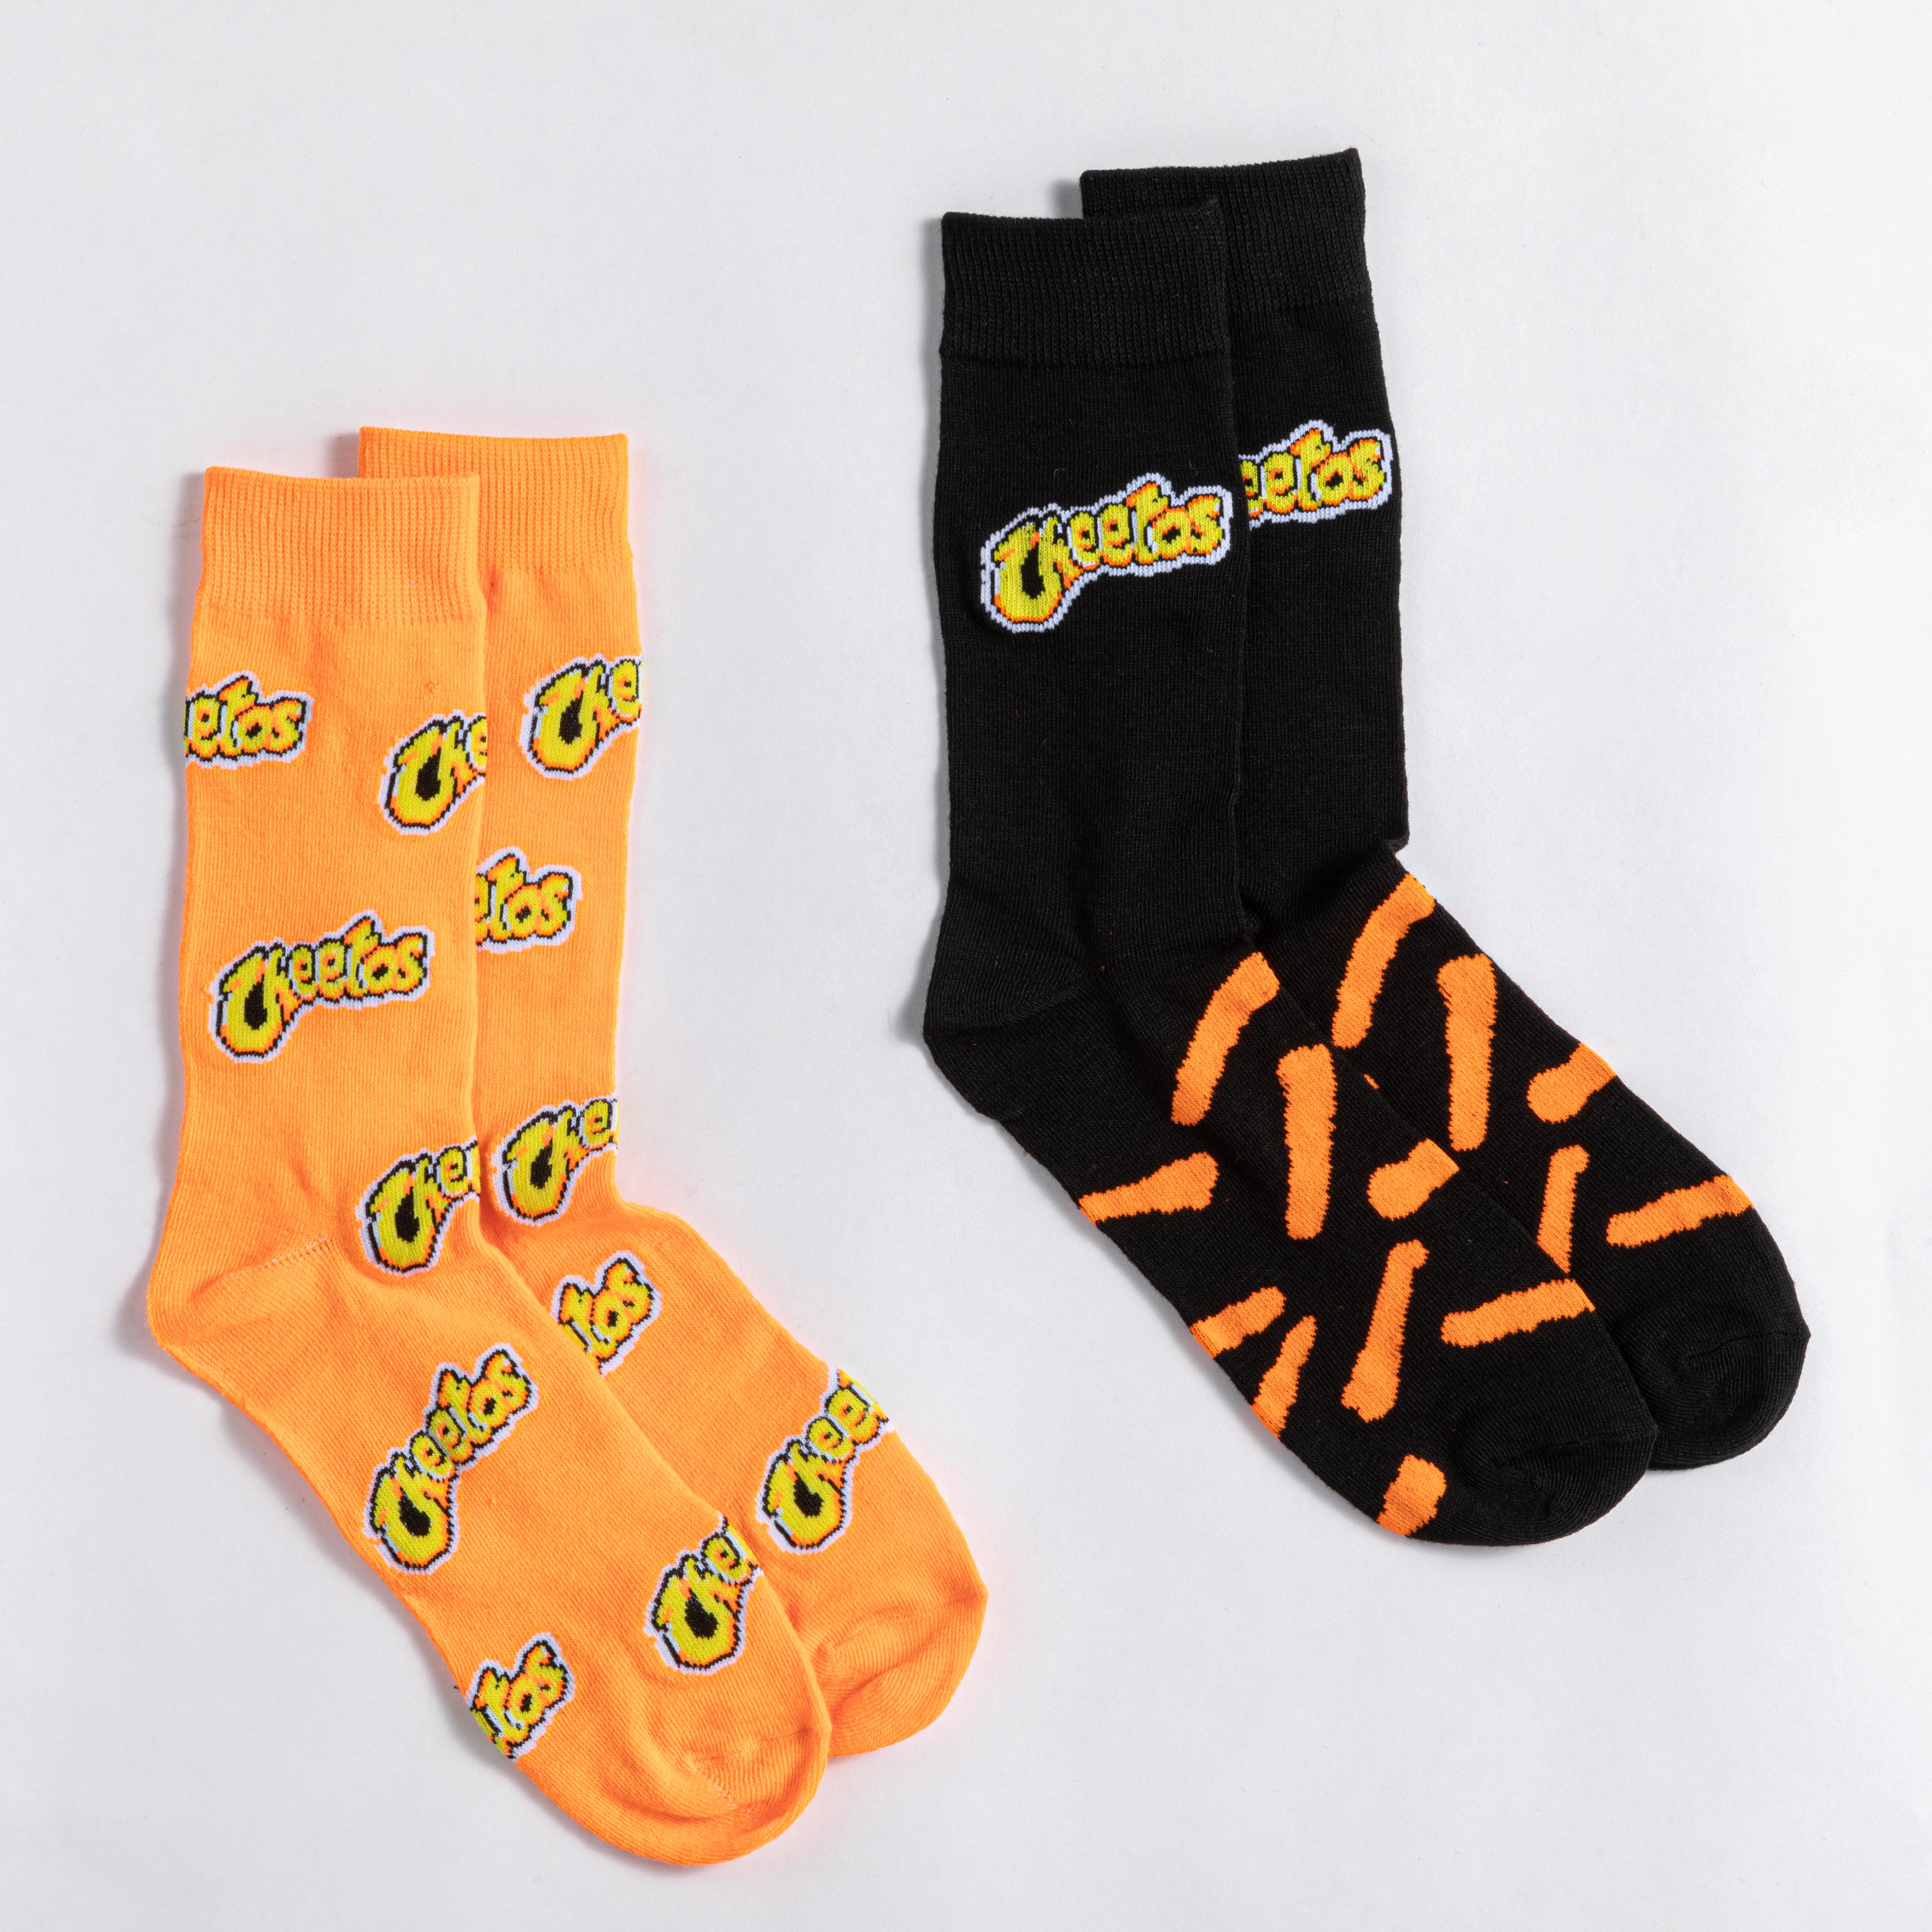 Socks Licensed - Cheetos - Dollars and Sense